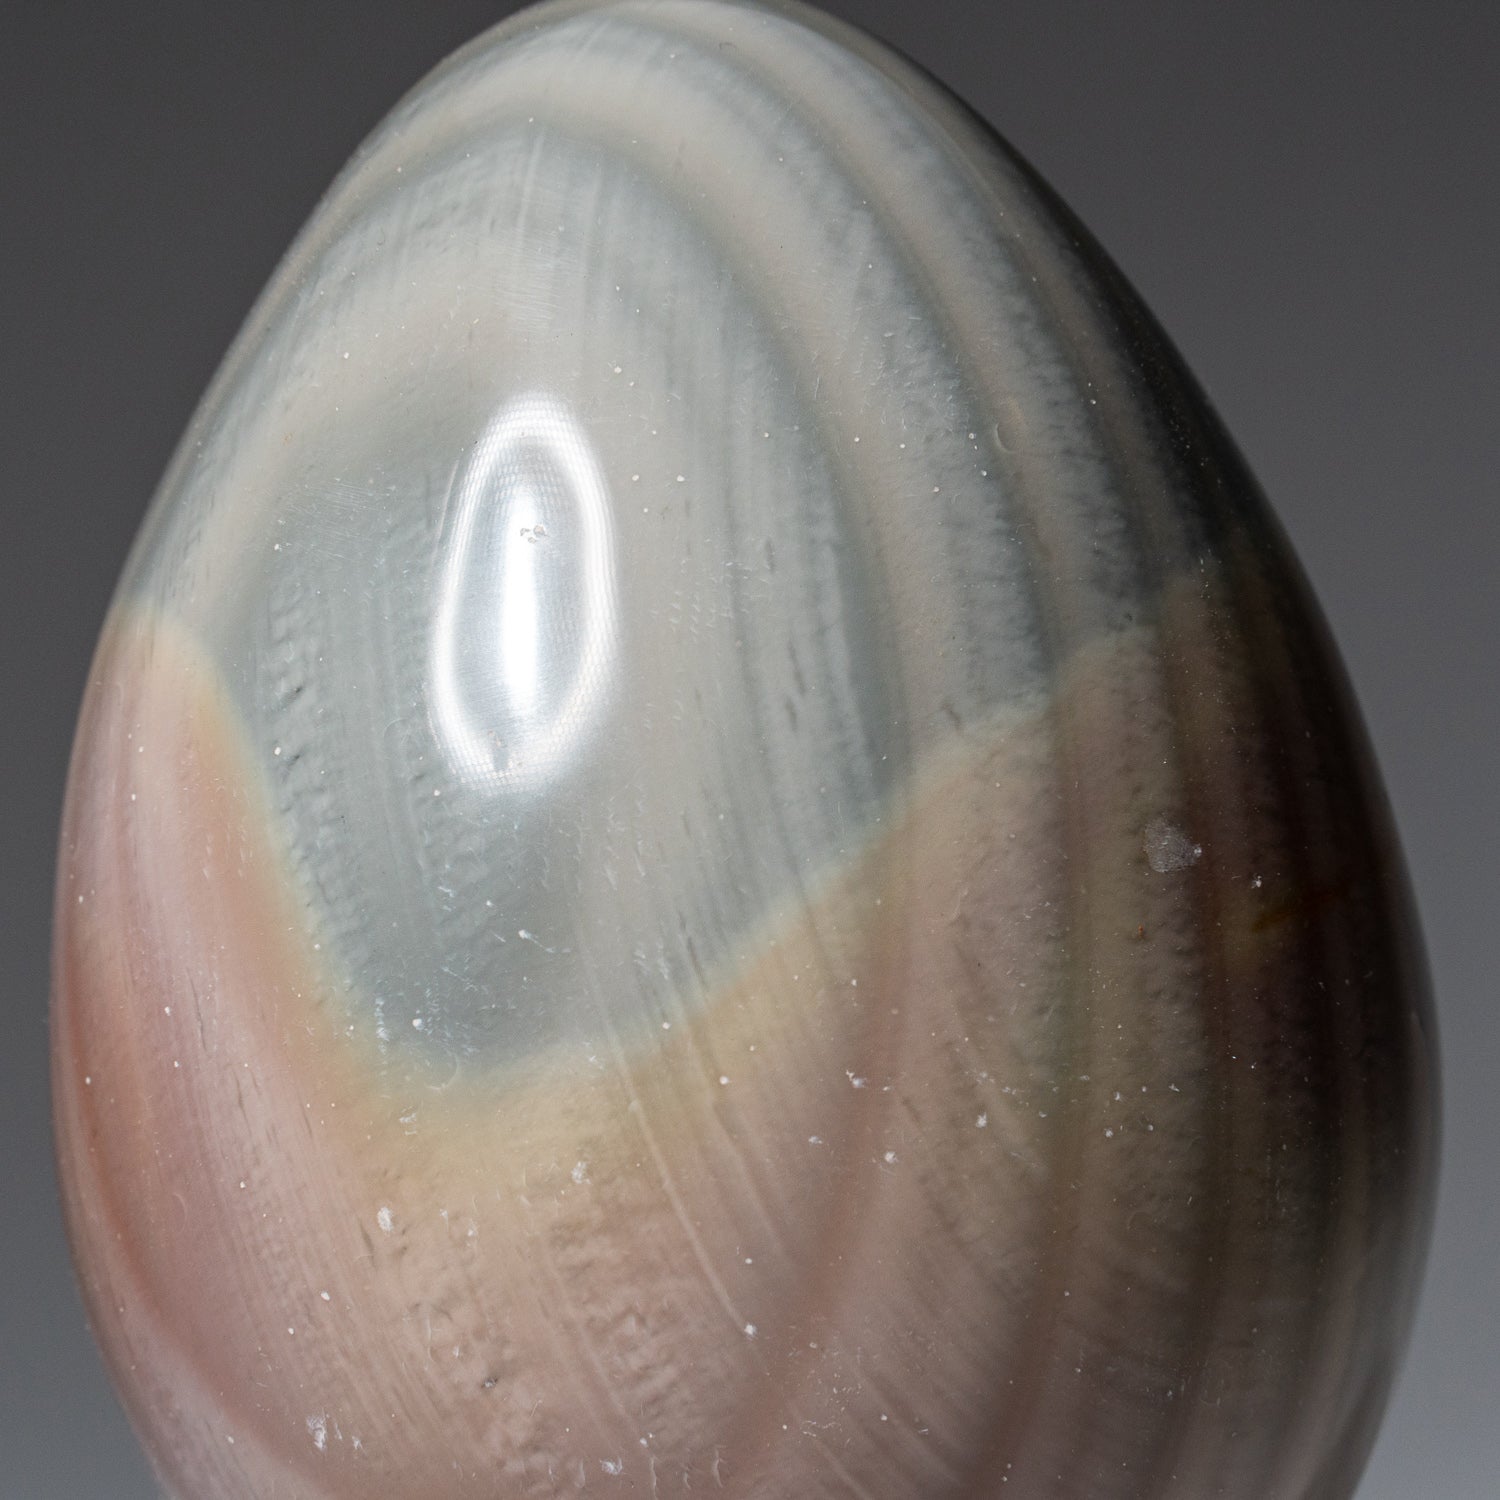 Genuine Polished Polychrome Egg from Madagascar (419 grams)